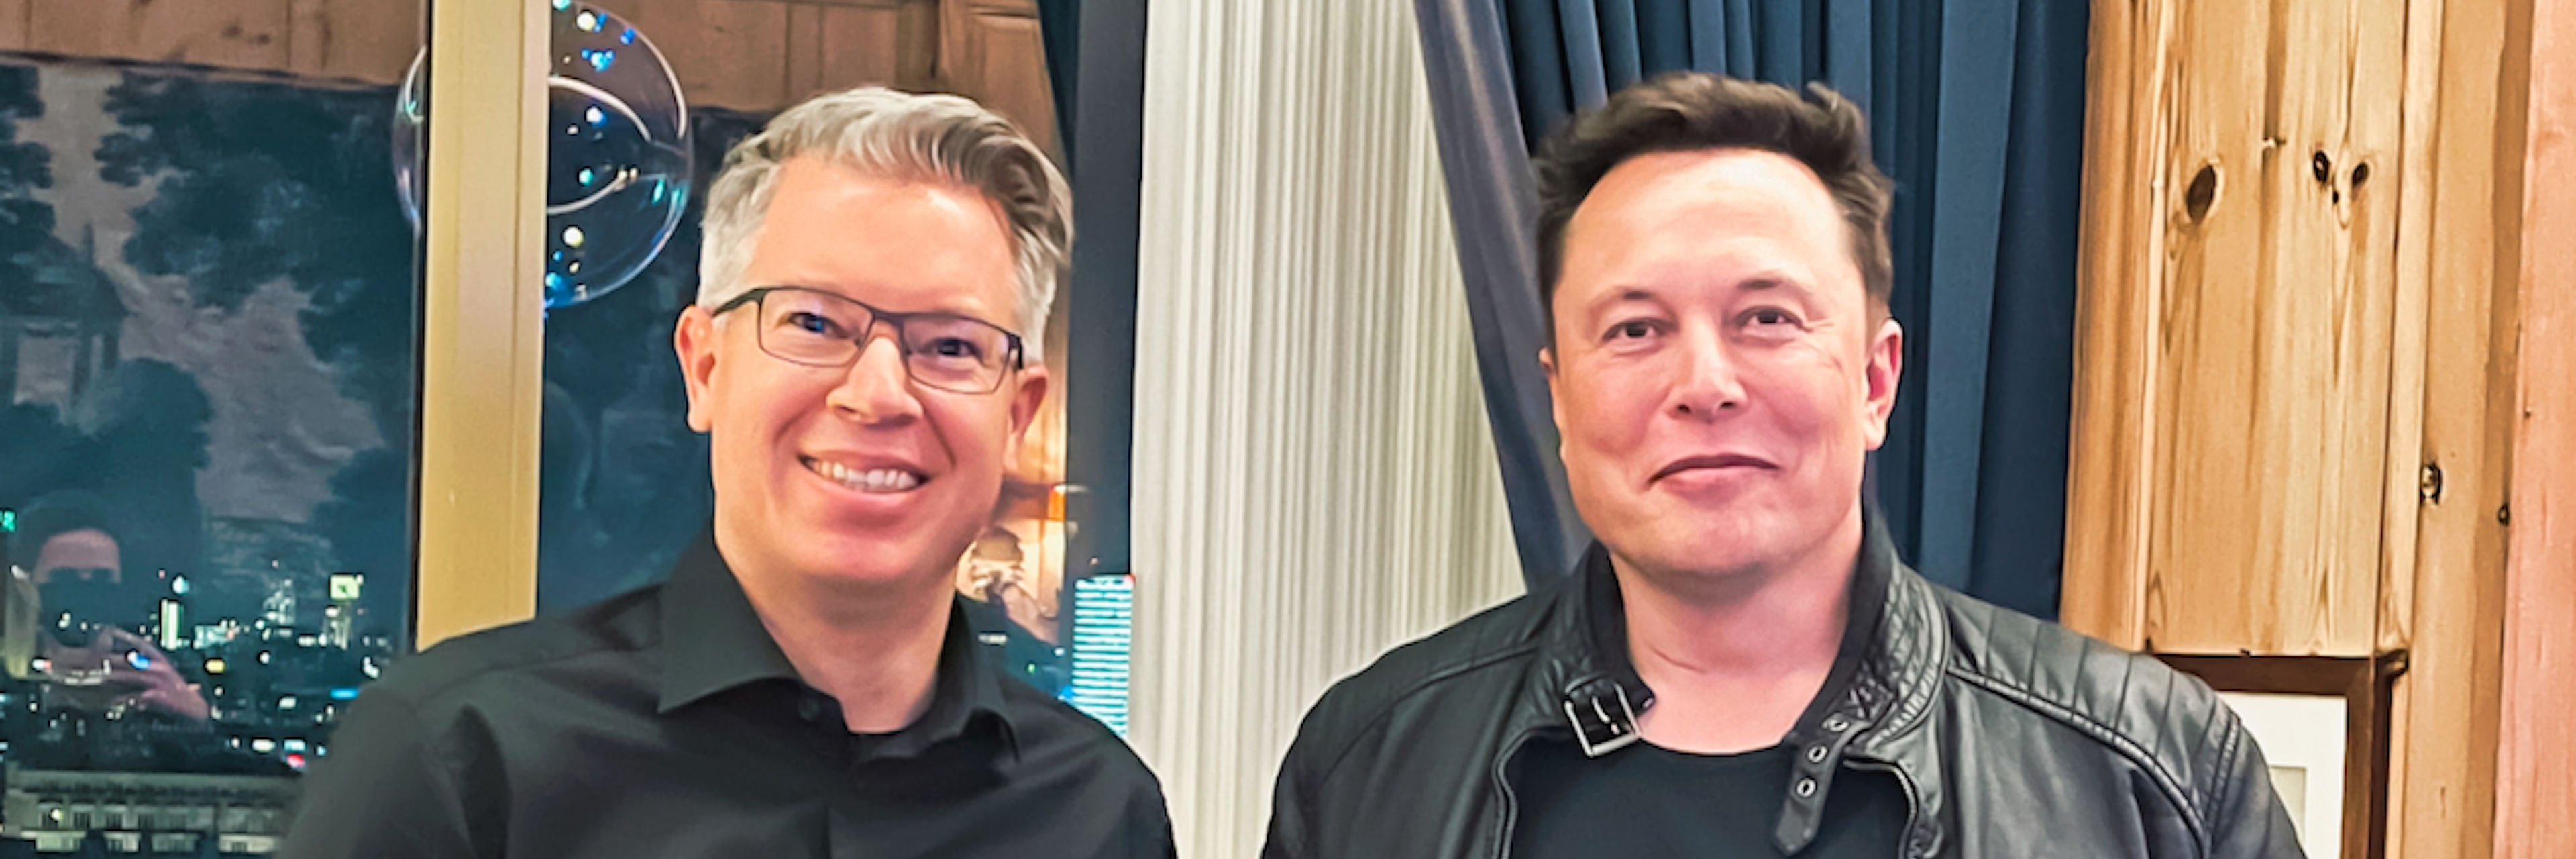 Frank Thelen and Elon Musk